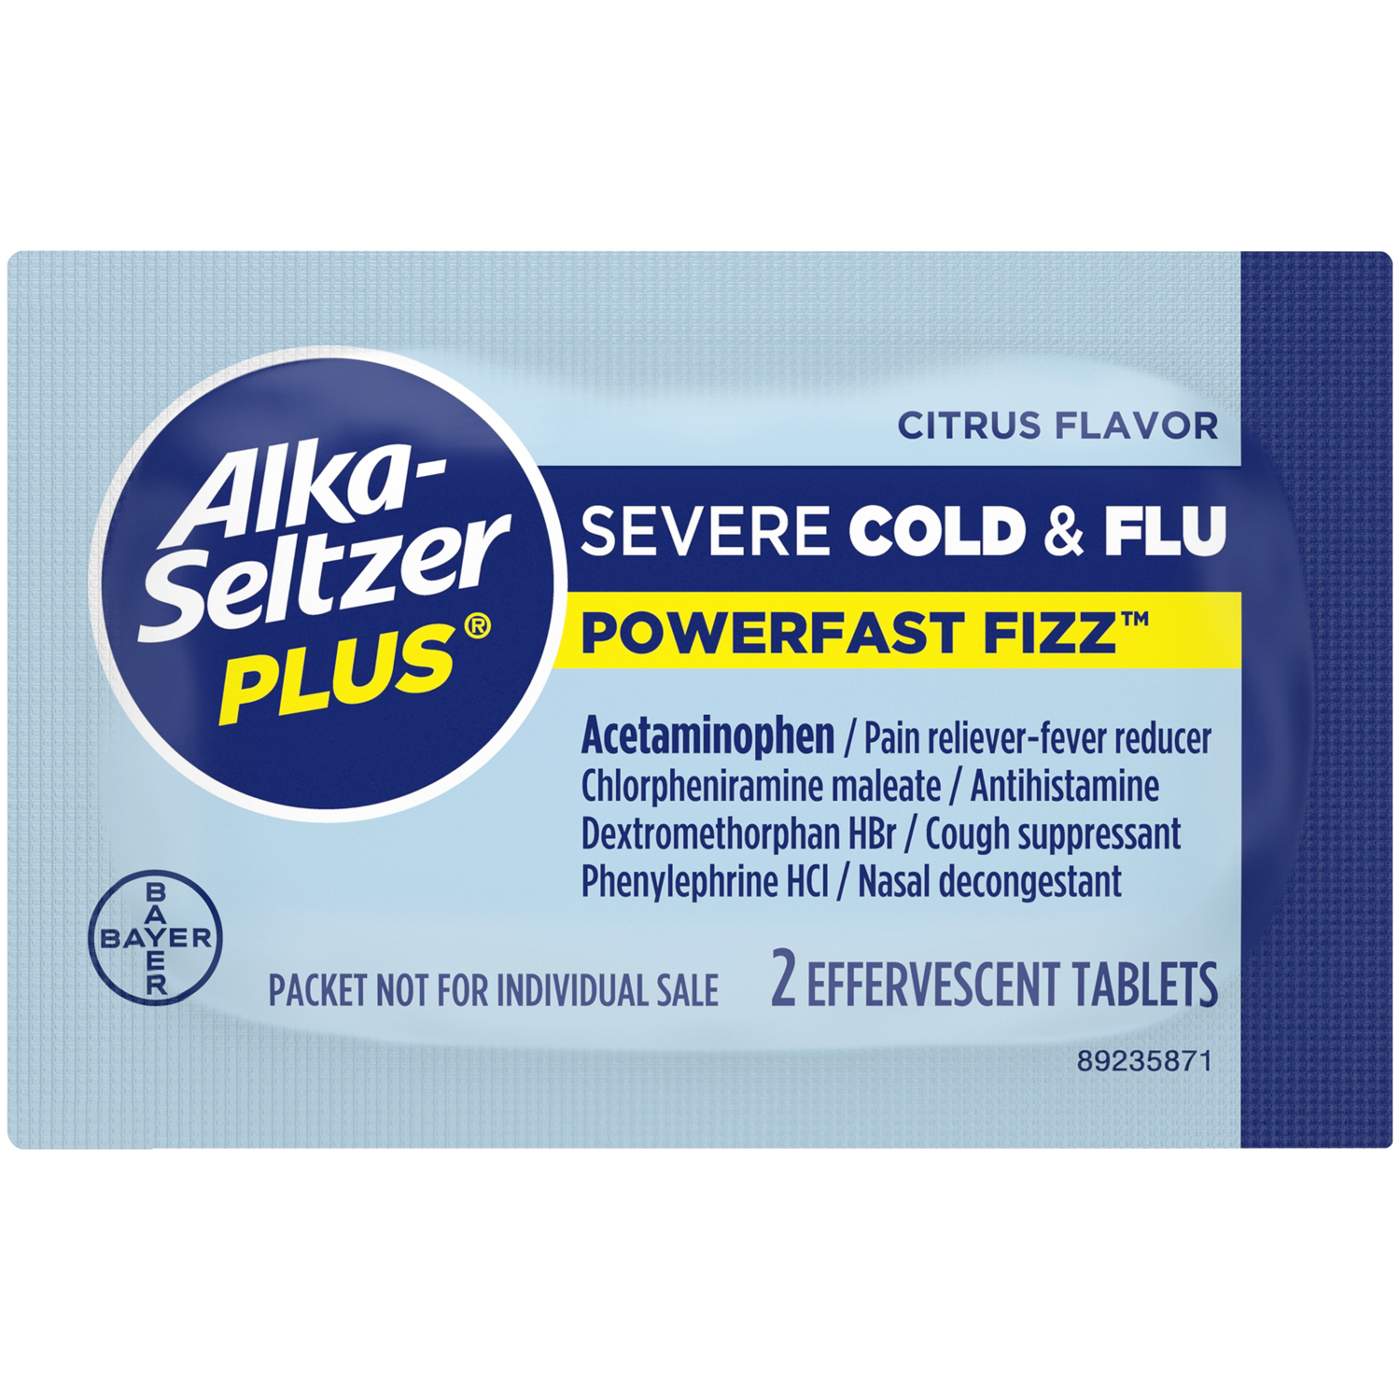 Alka-Seltzer Plus Severe Cold & Flu Powerfast Fizz Tablets - Citrus; image 6 of 6